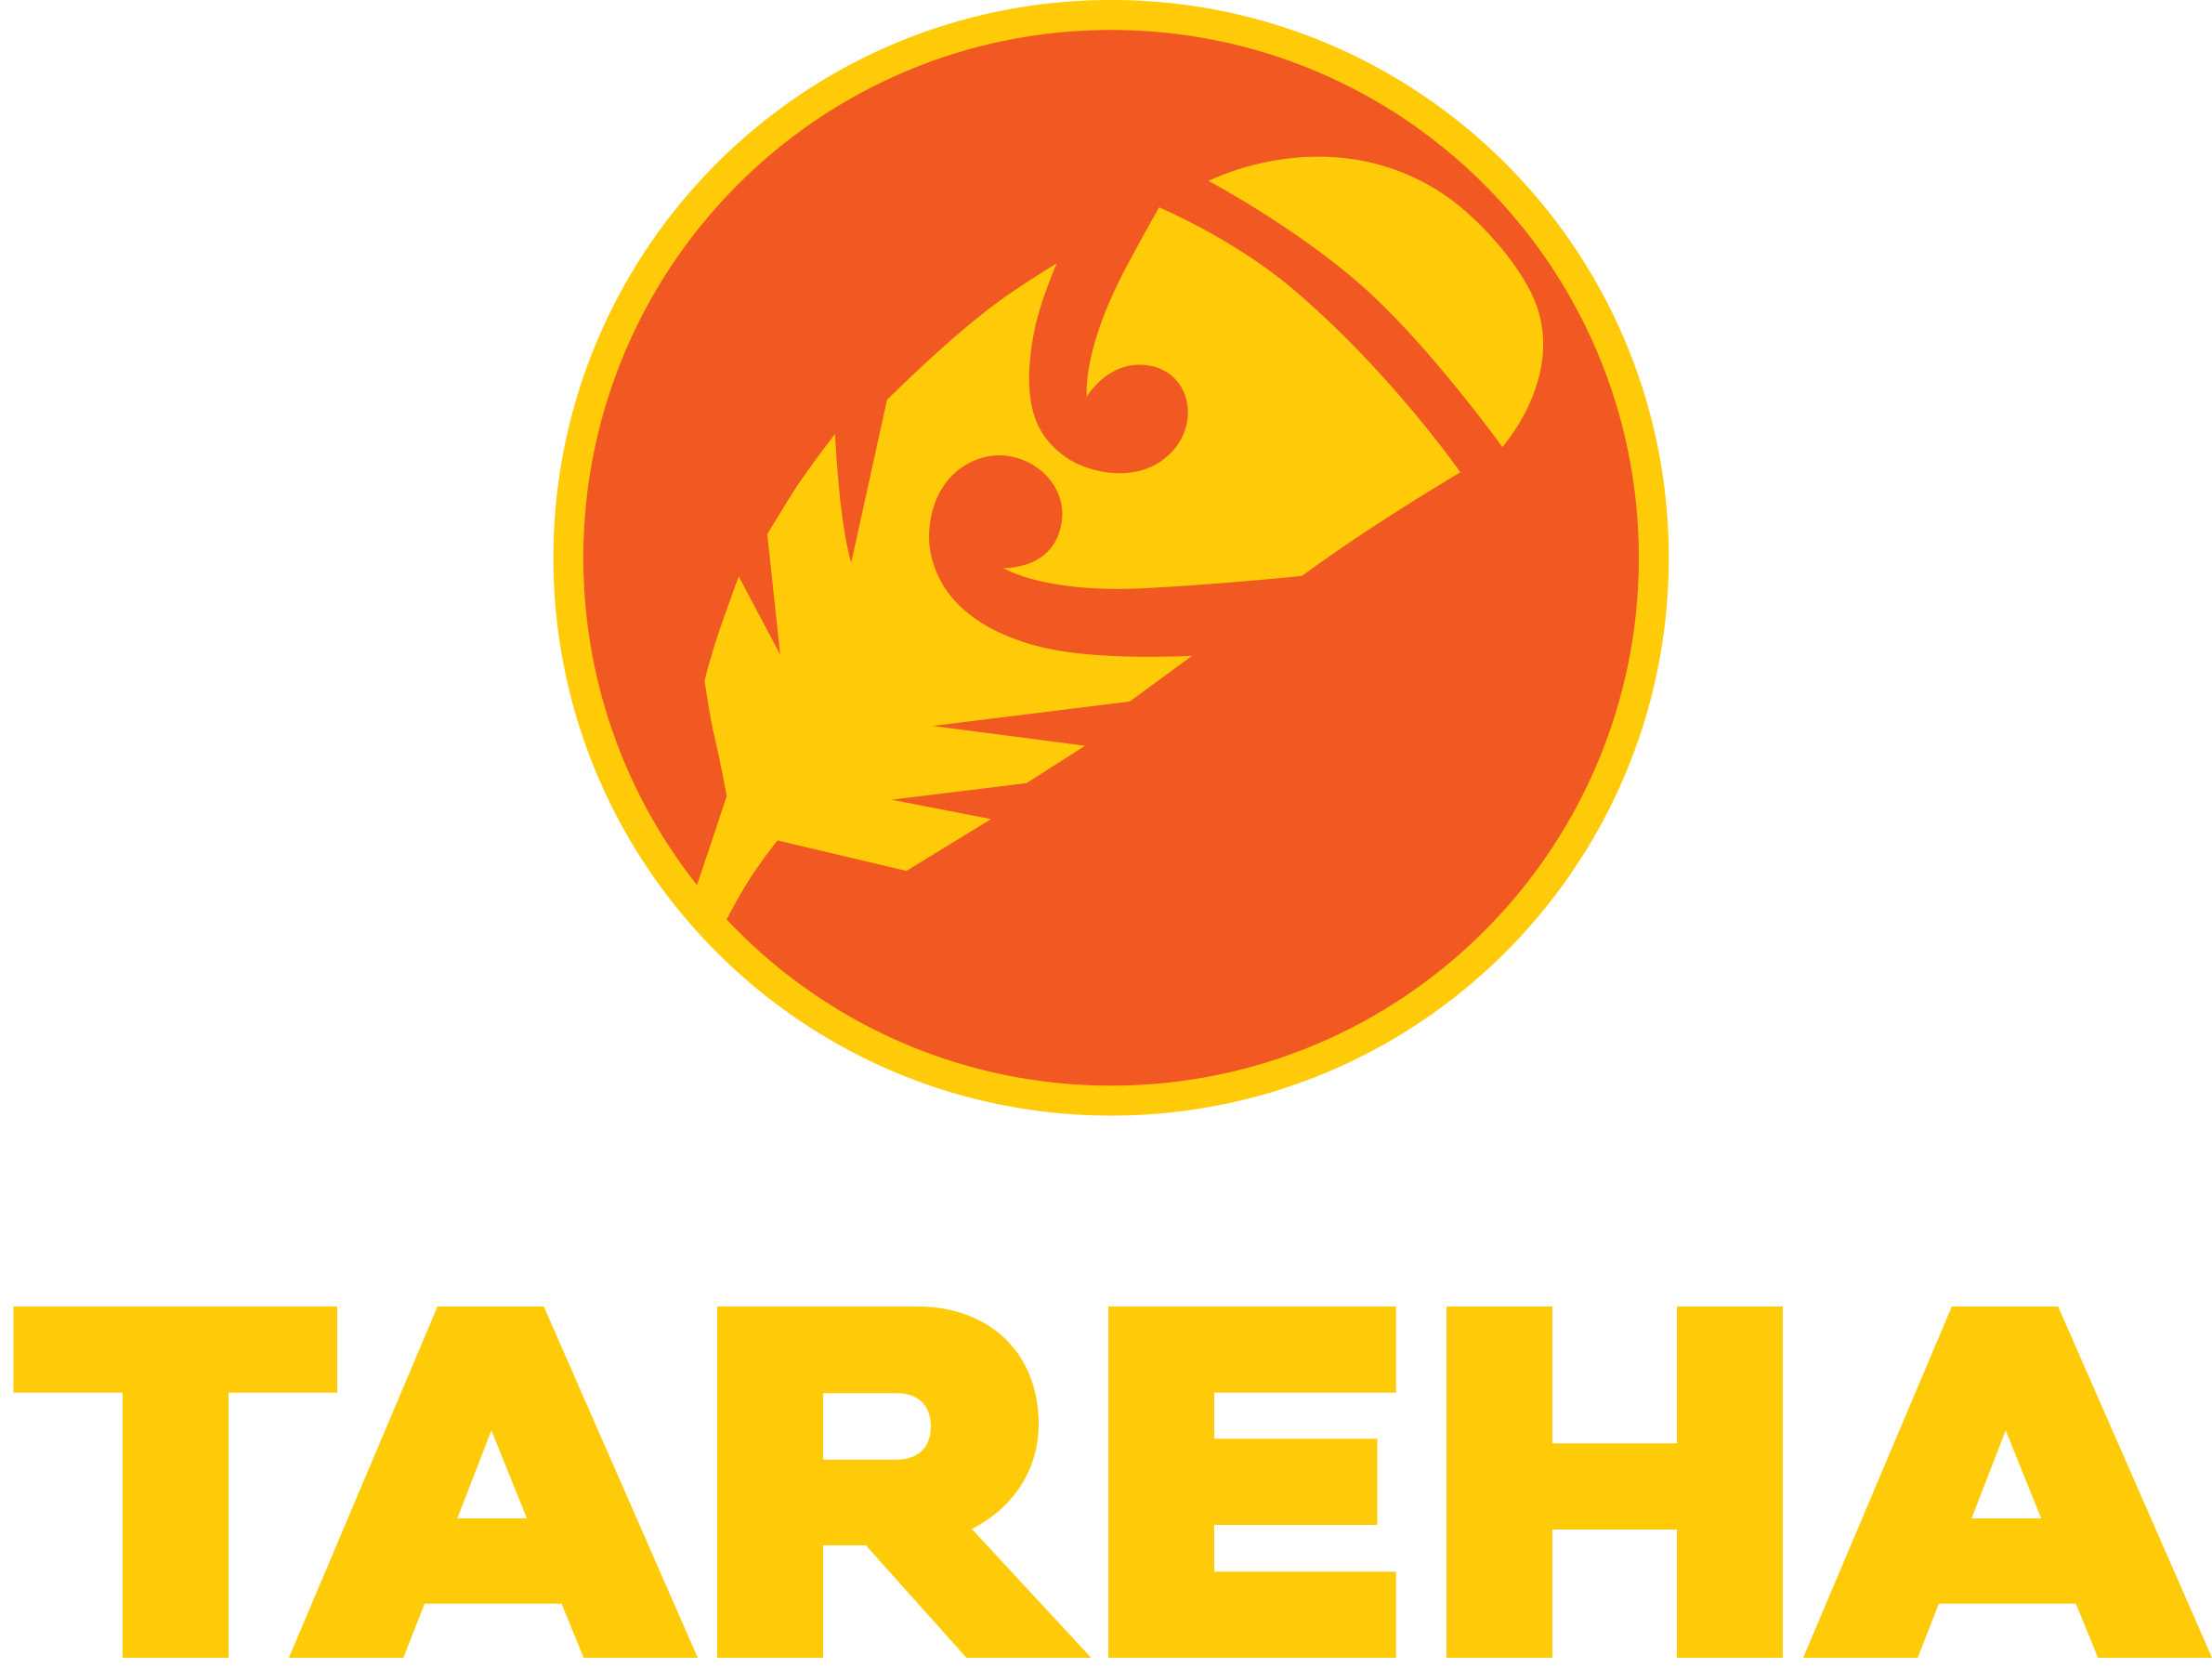 Taradale Teams and Values Logos copy